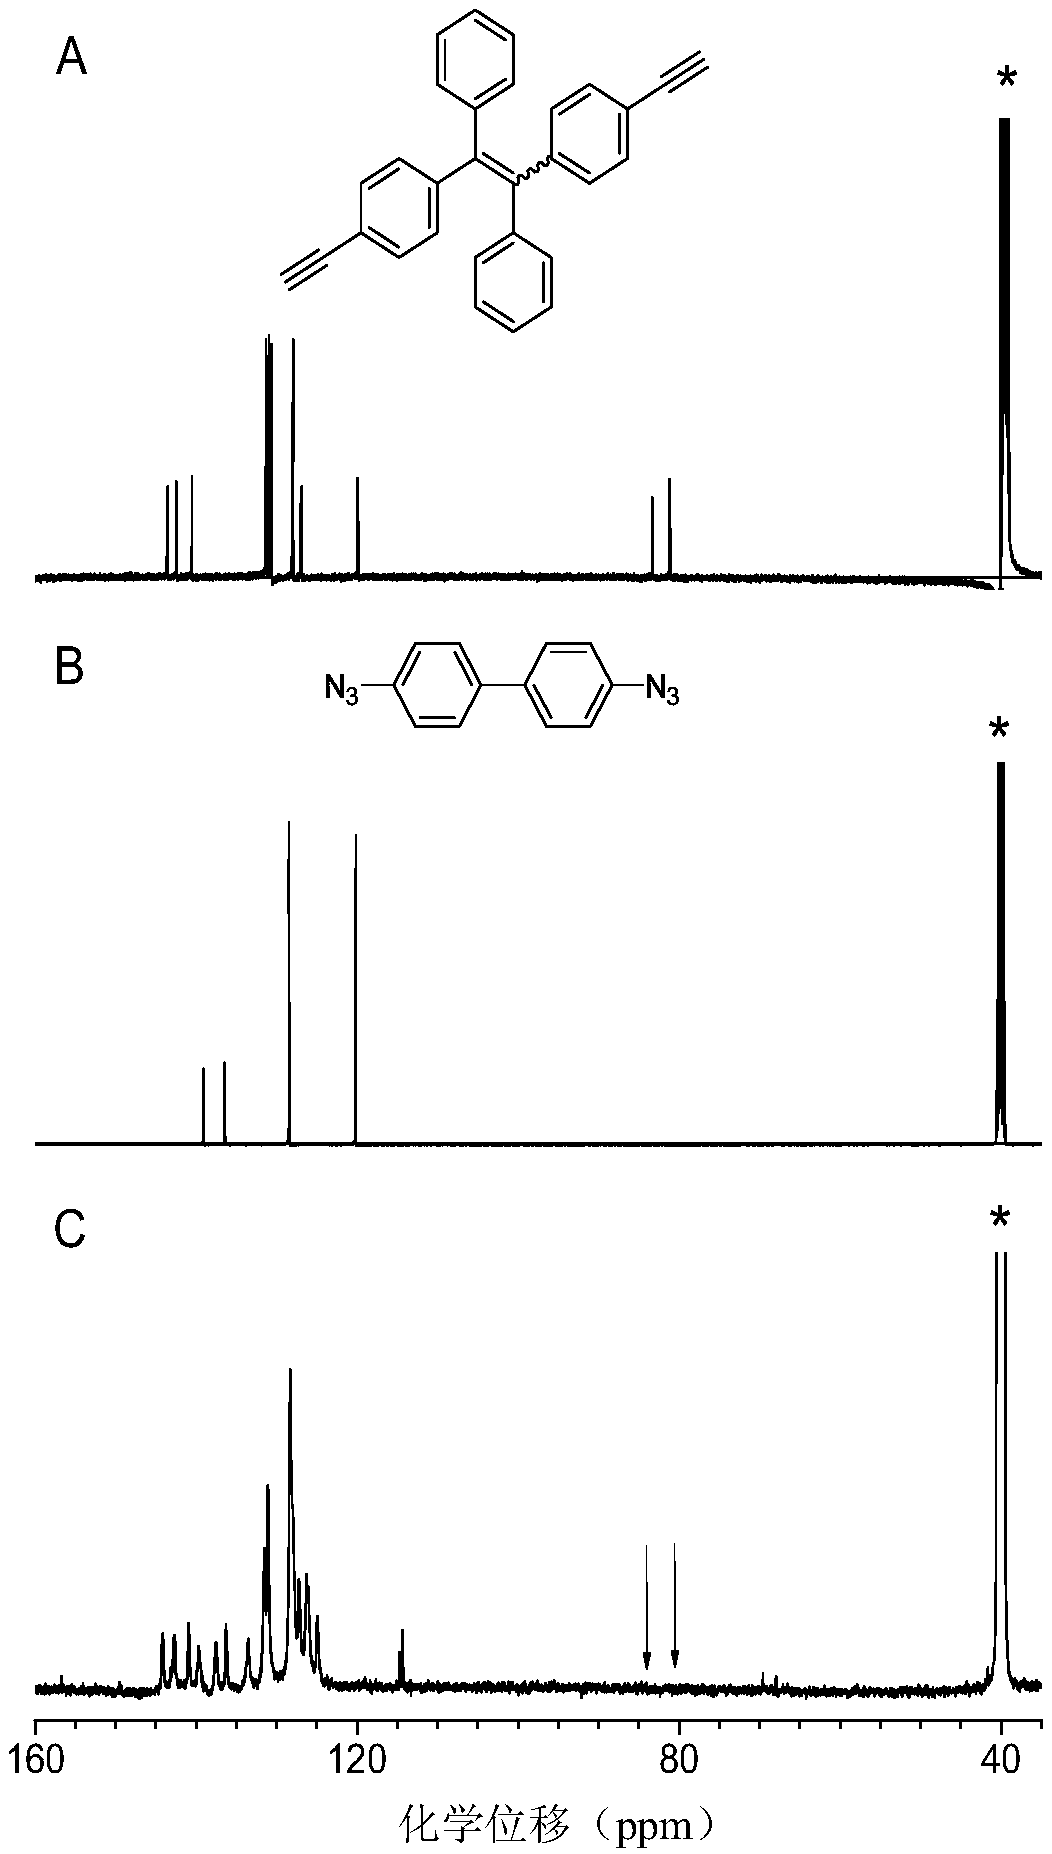 A kind of method for preparing 1,5-stereoregular polytriazole mediated by phosphazene base